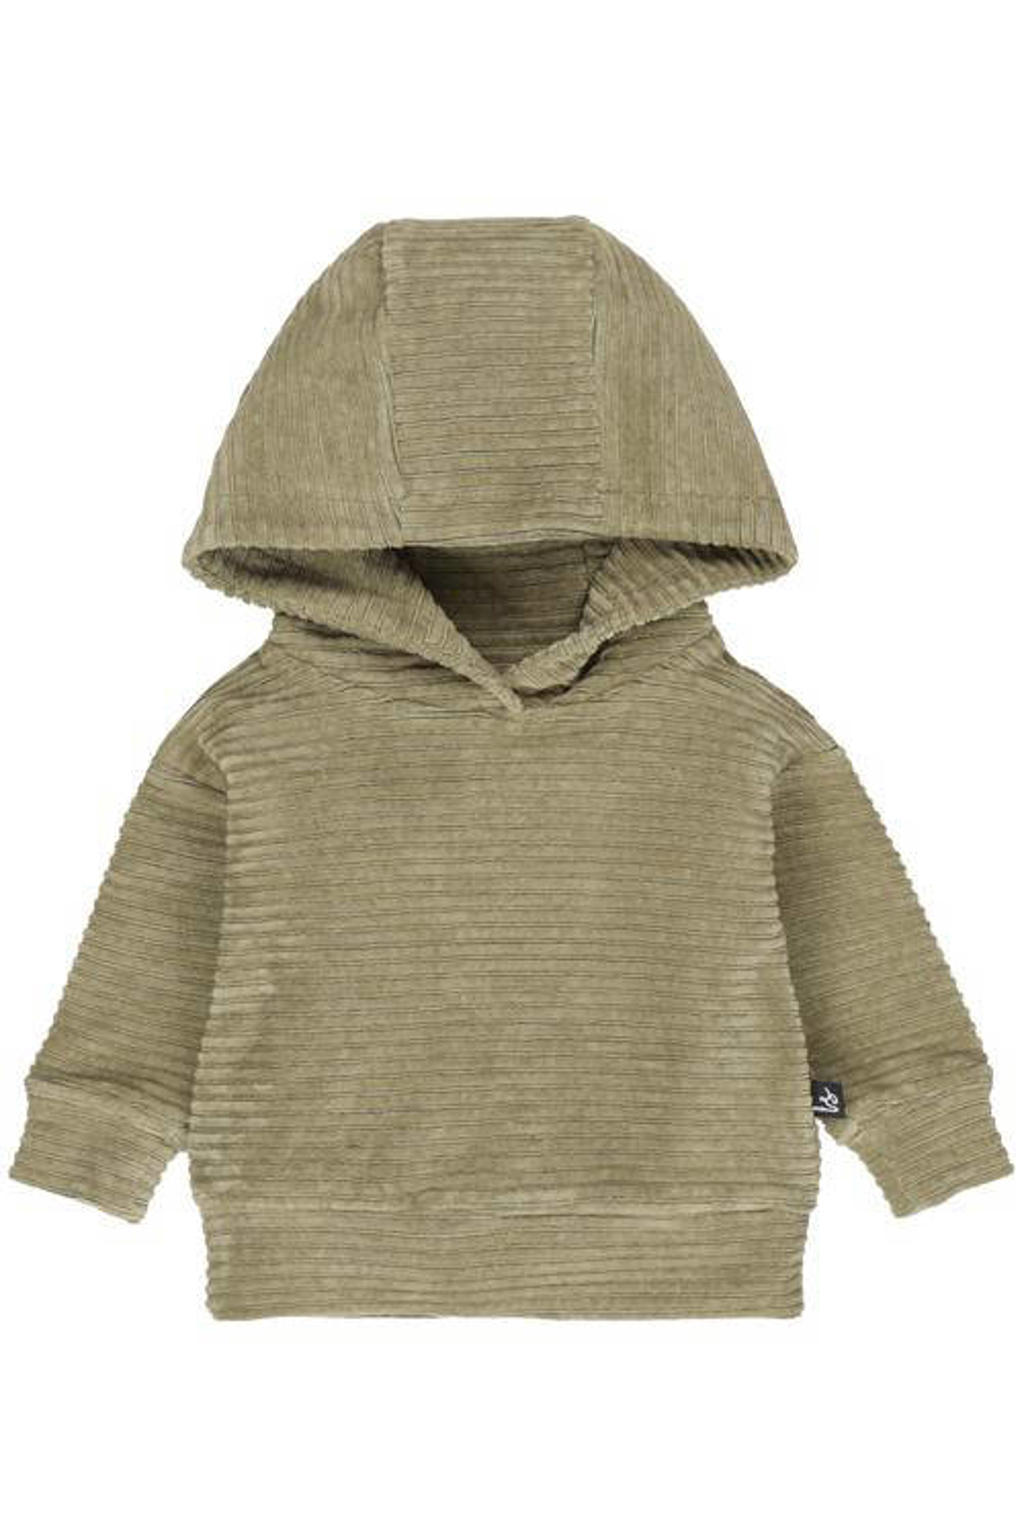 Kakikleurige jongens Babystyling baby ribgebreide corduroy hoodie met lange mouwen en ronde hals